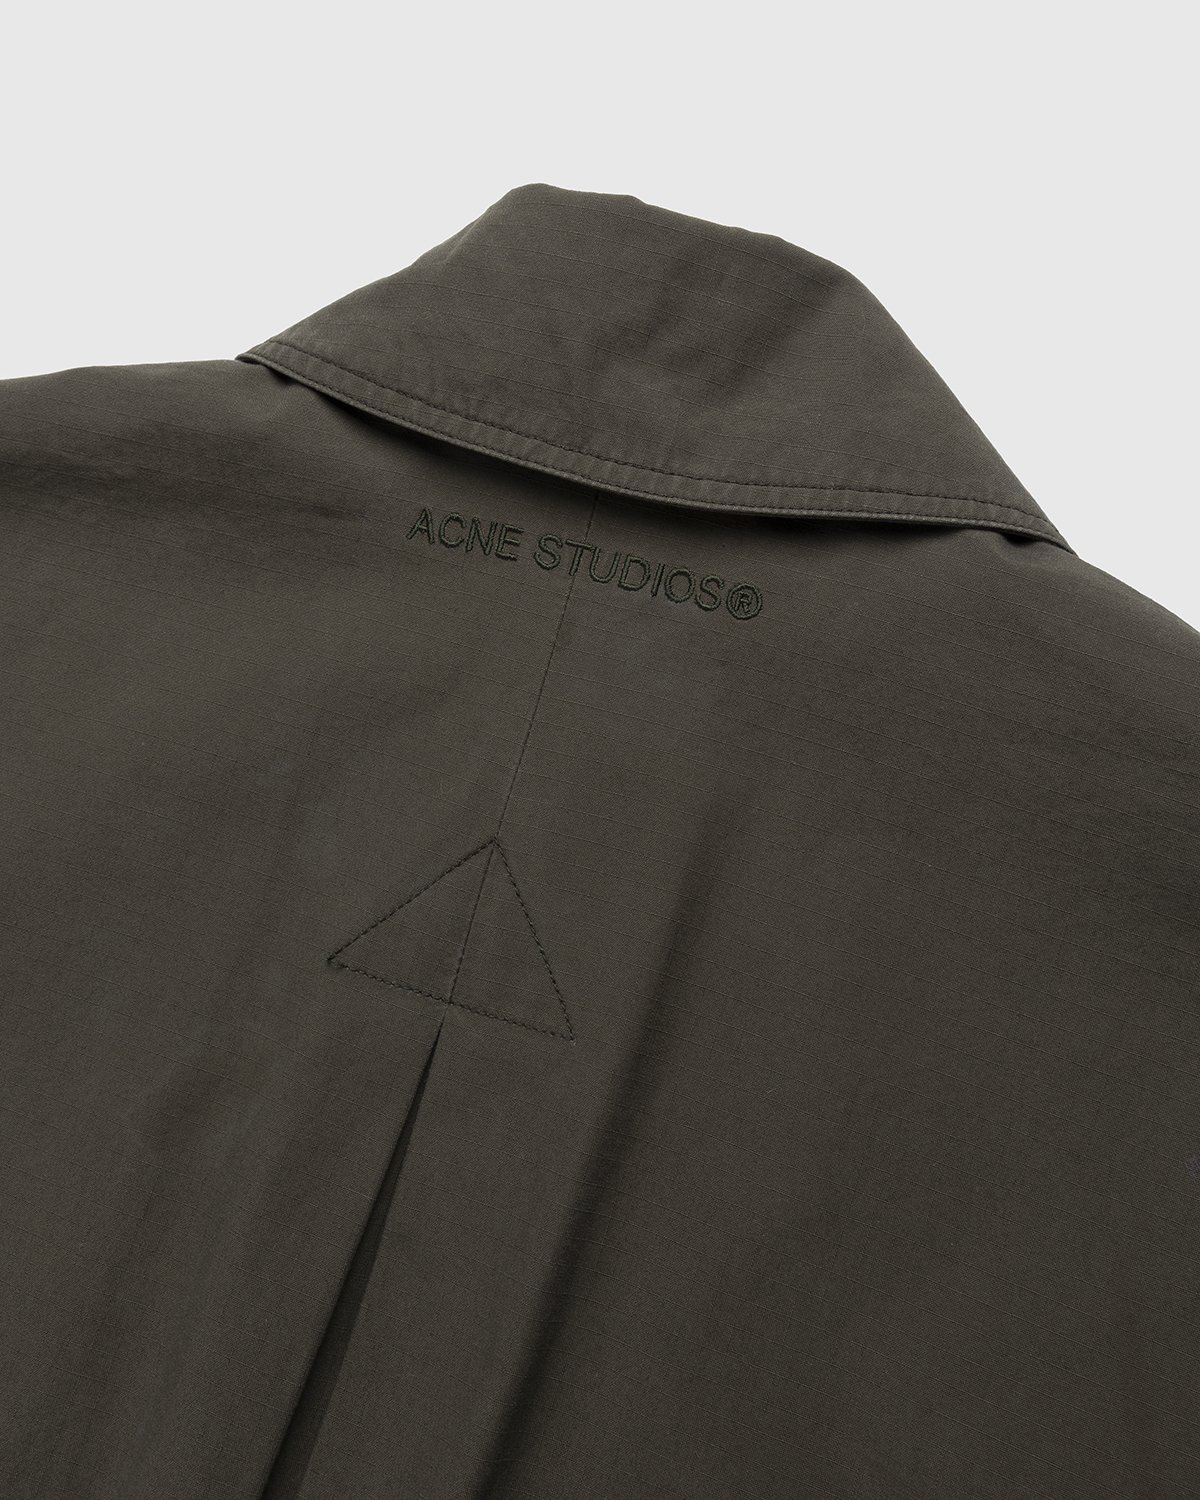 Acne Studios - Coat Dark Olive - Clothing - Green - Image 4